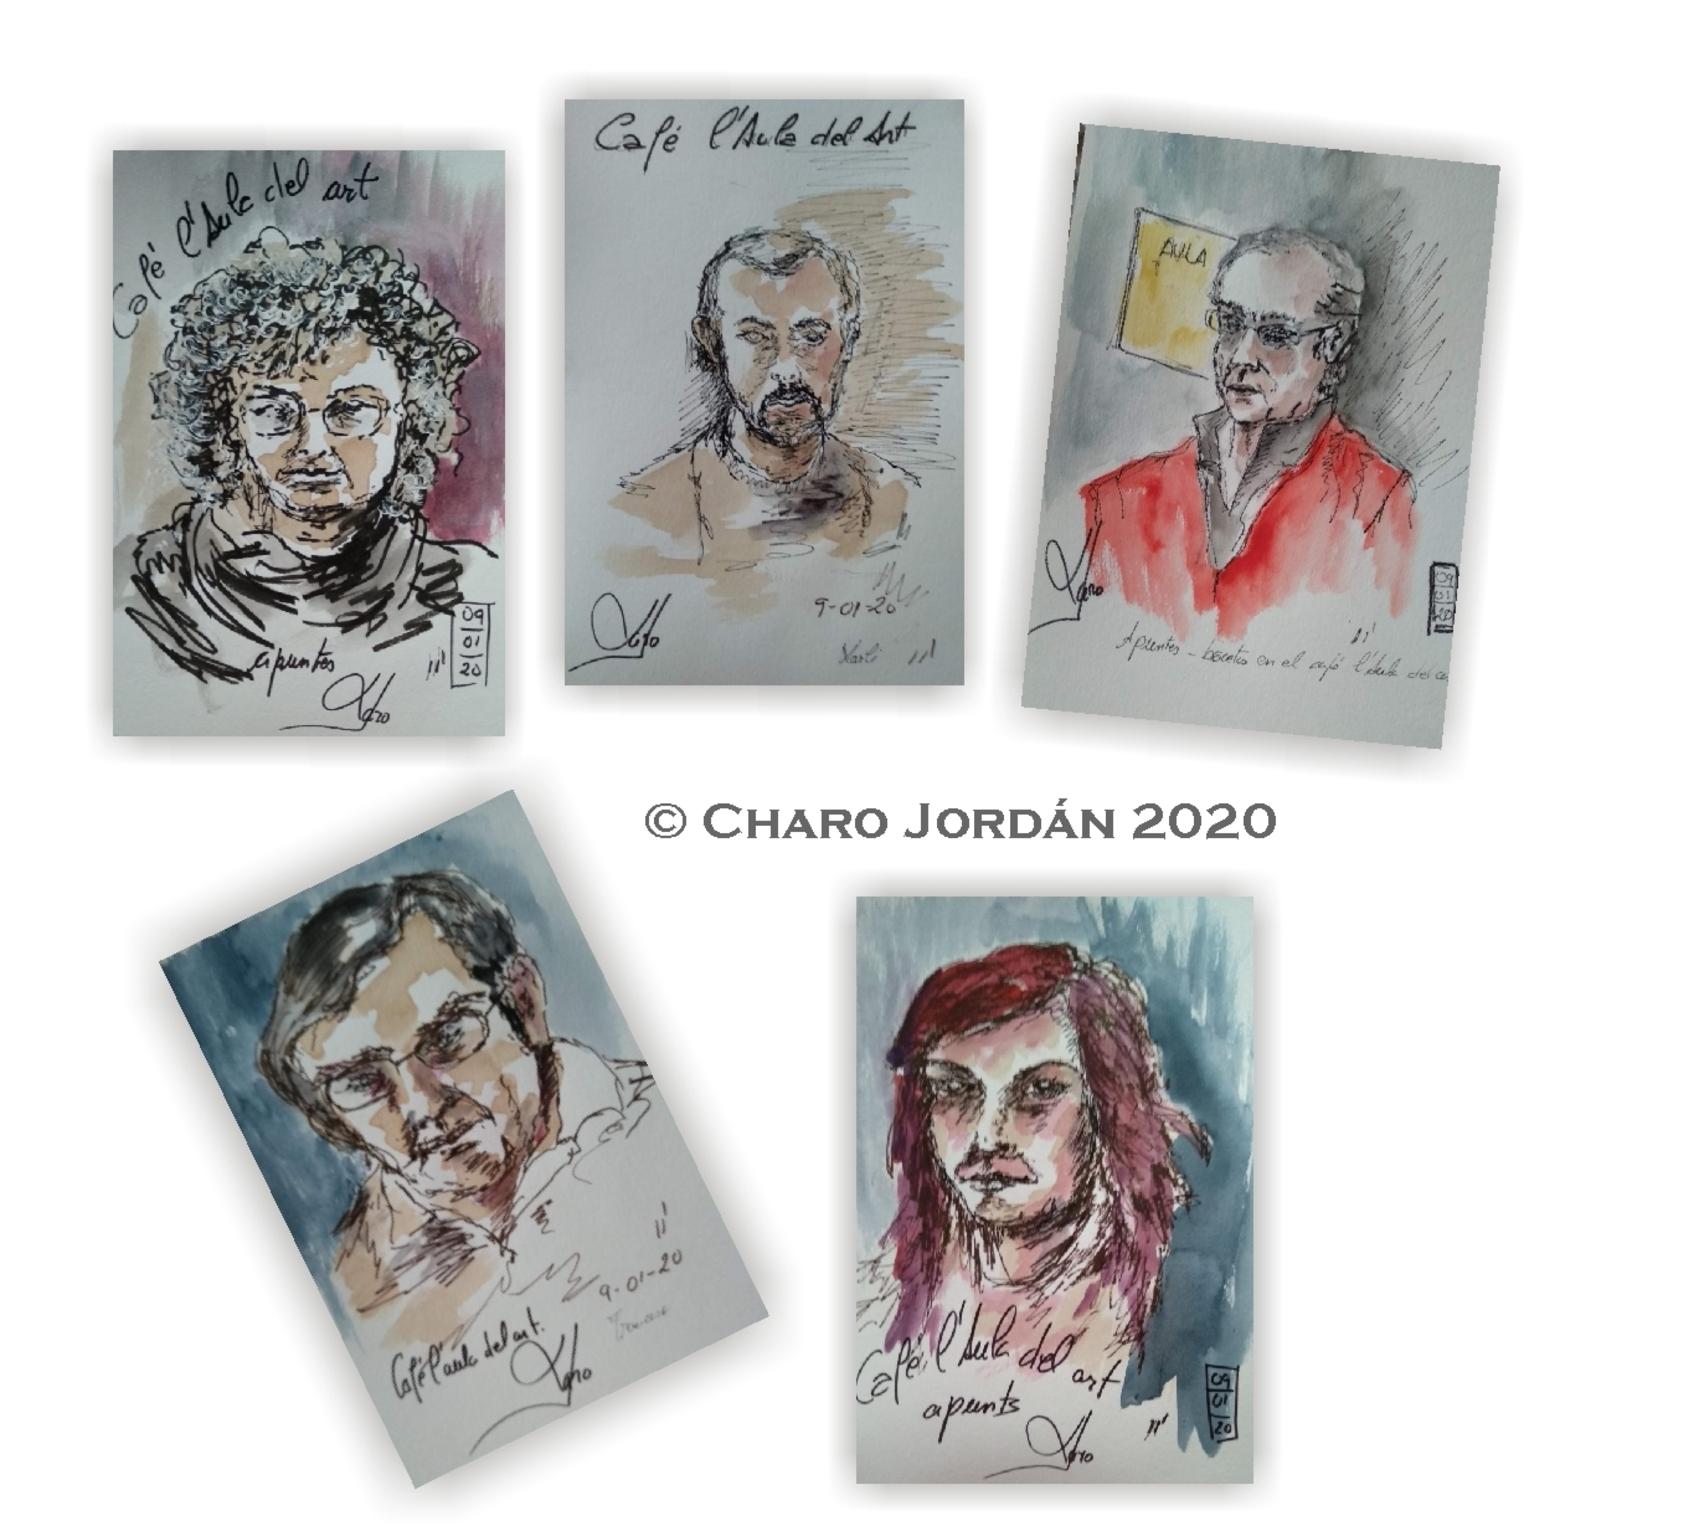  Charo Jordn 2020